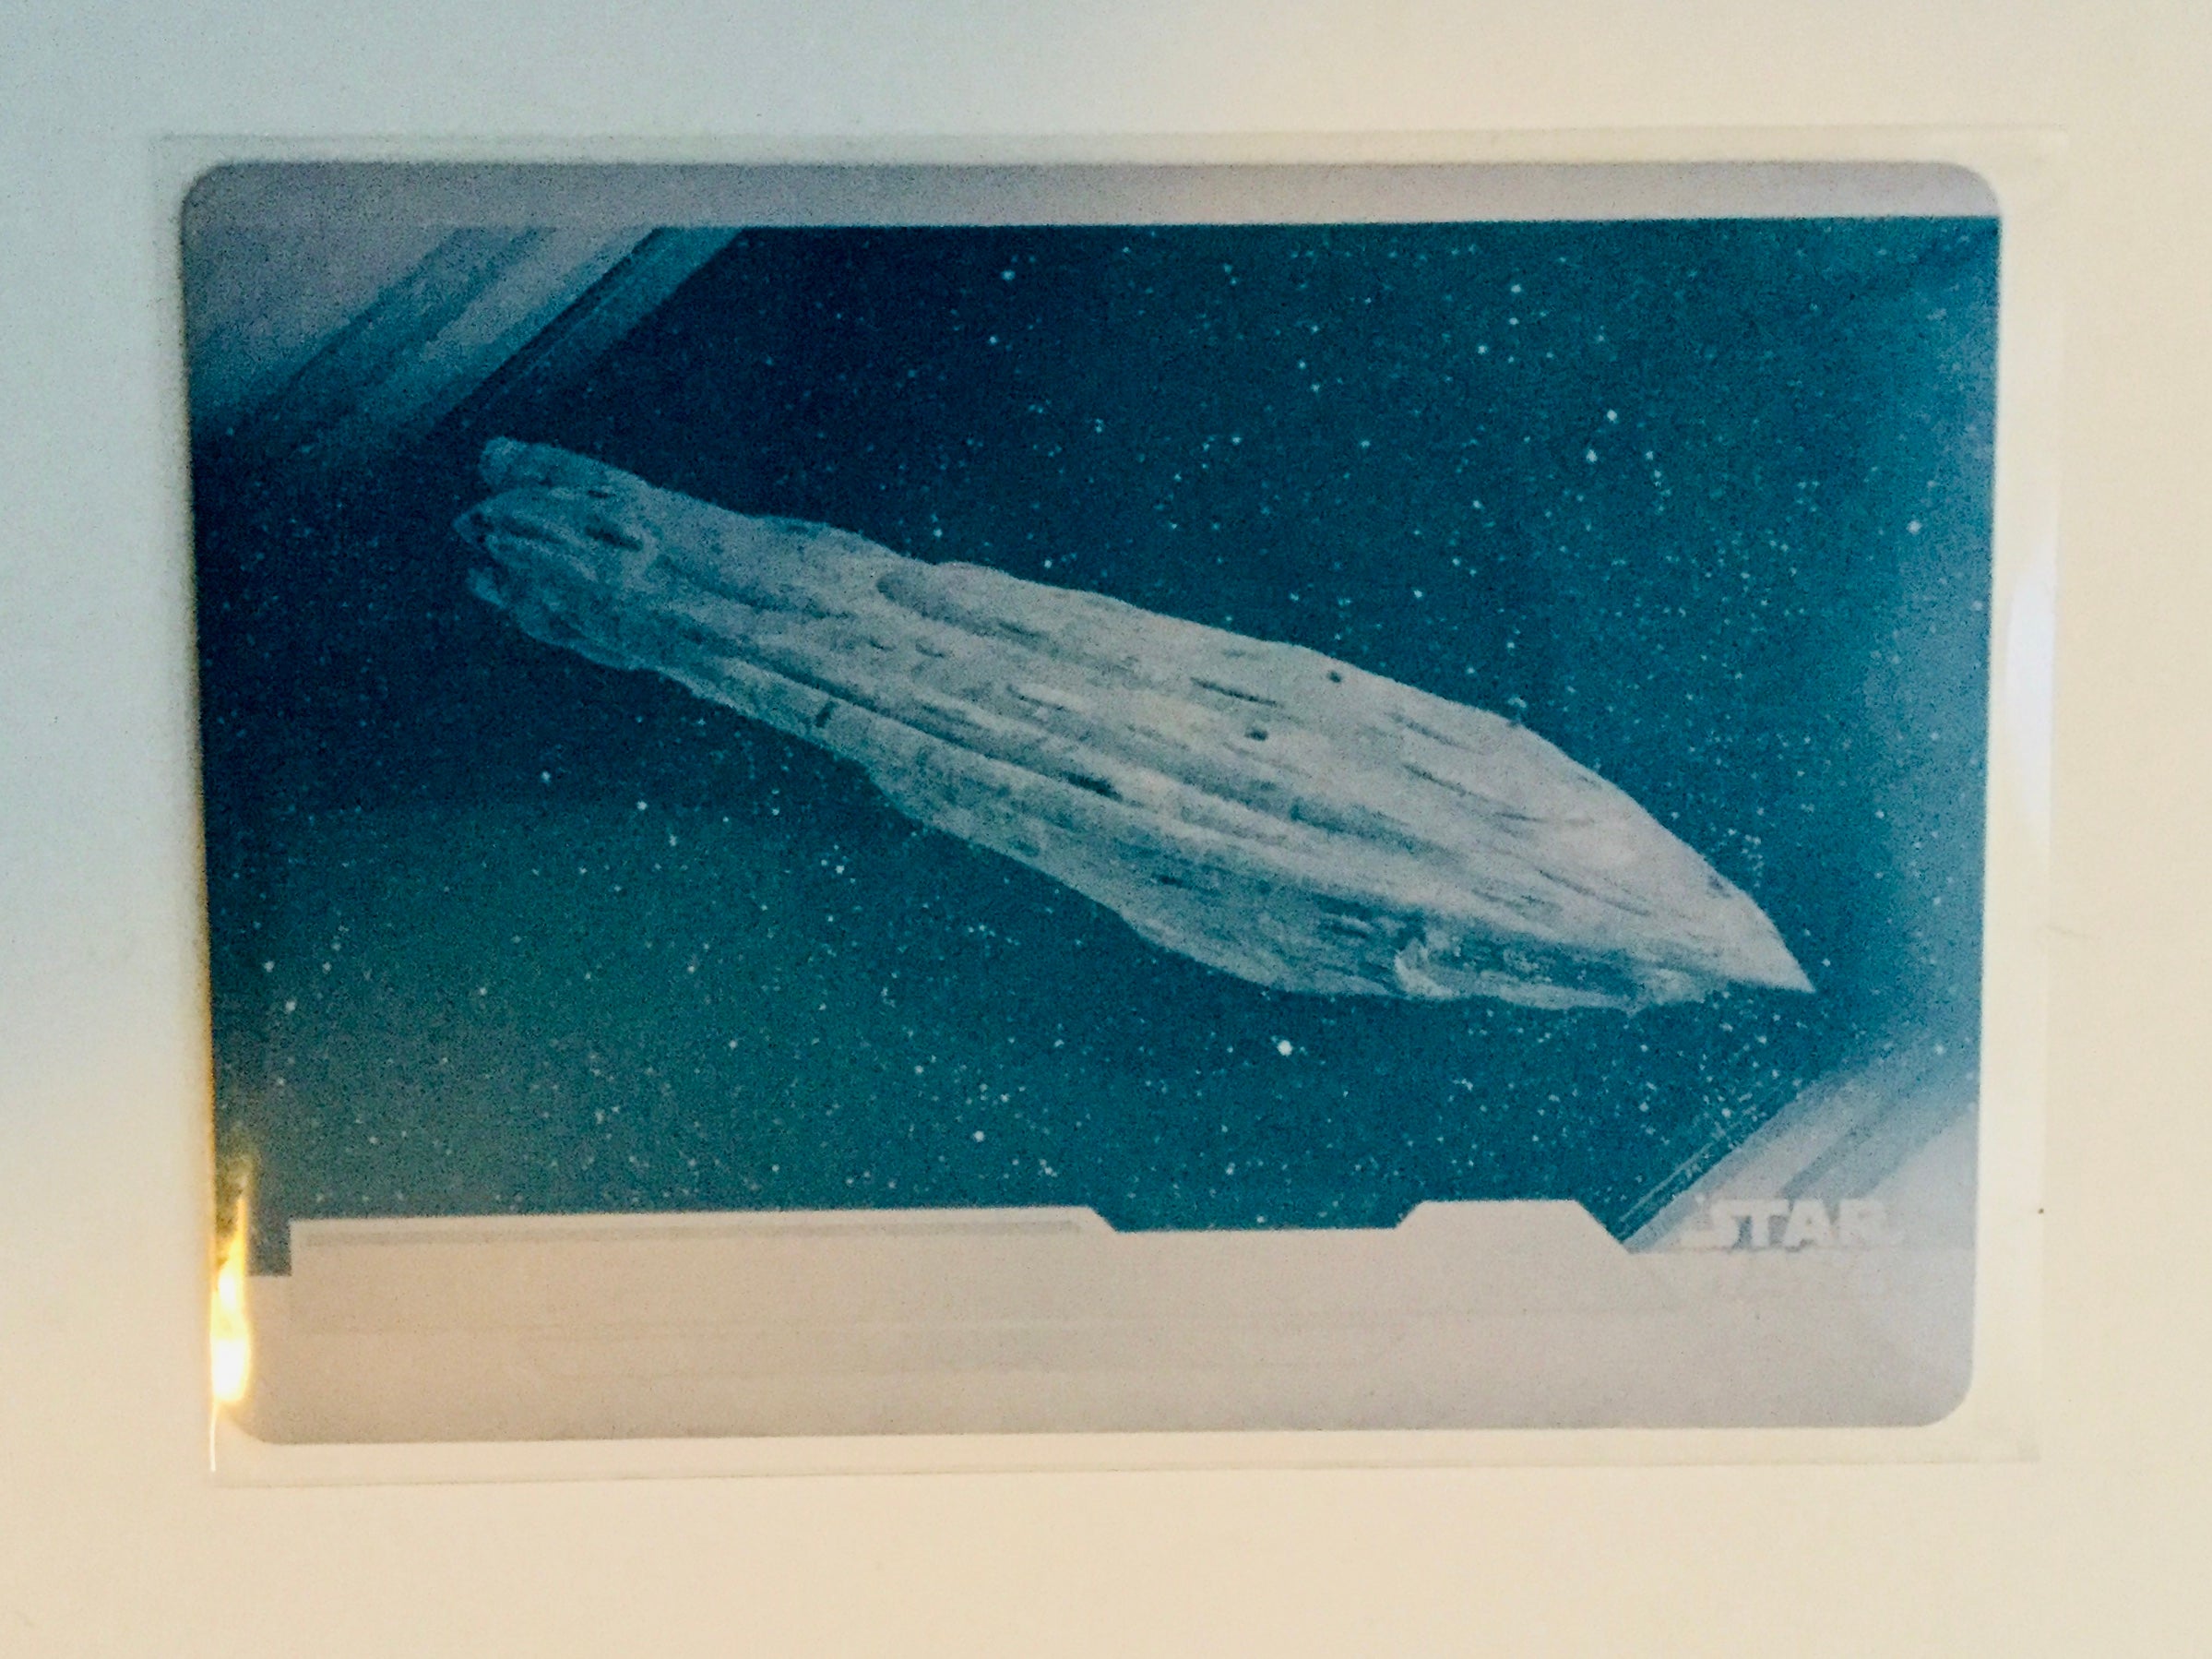 Star Wars rare 1/1 metal printing plate ship insert  card